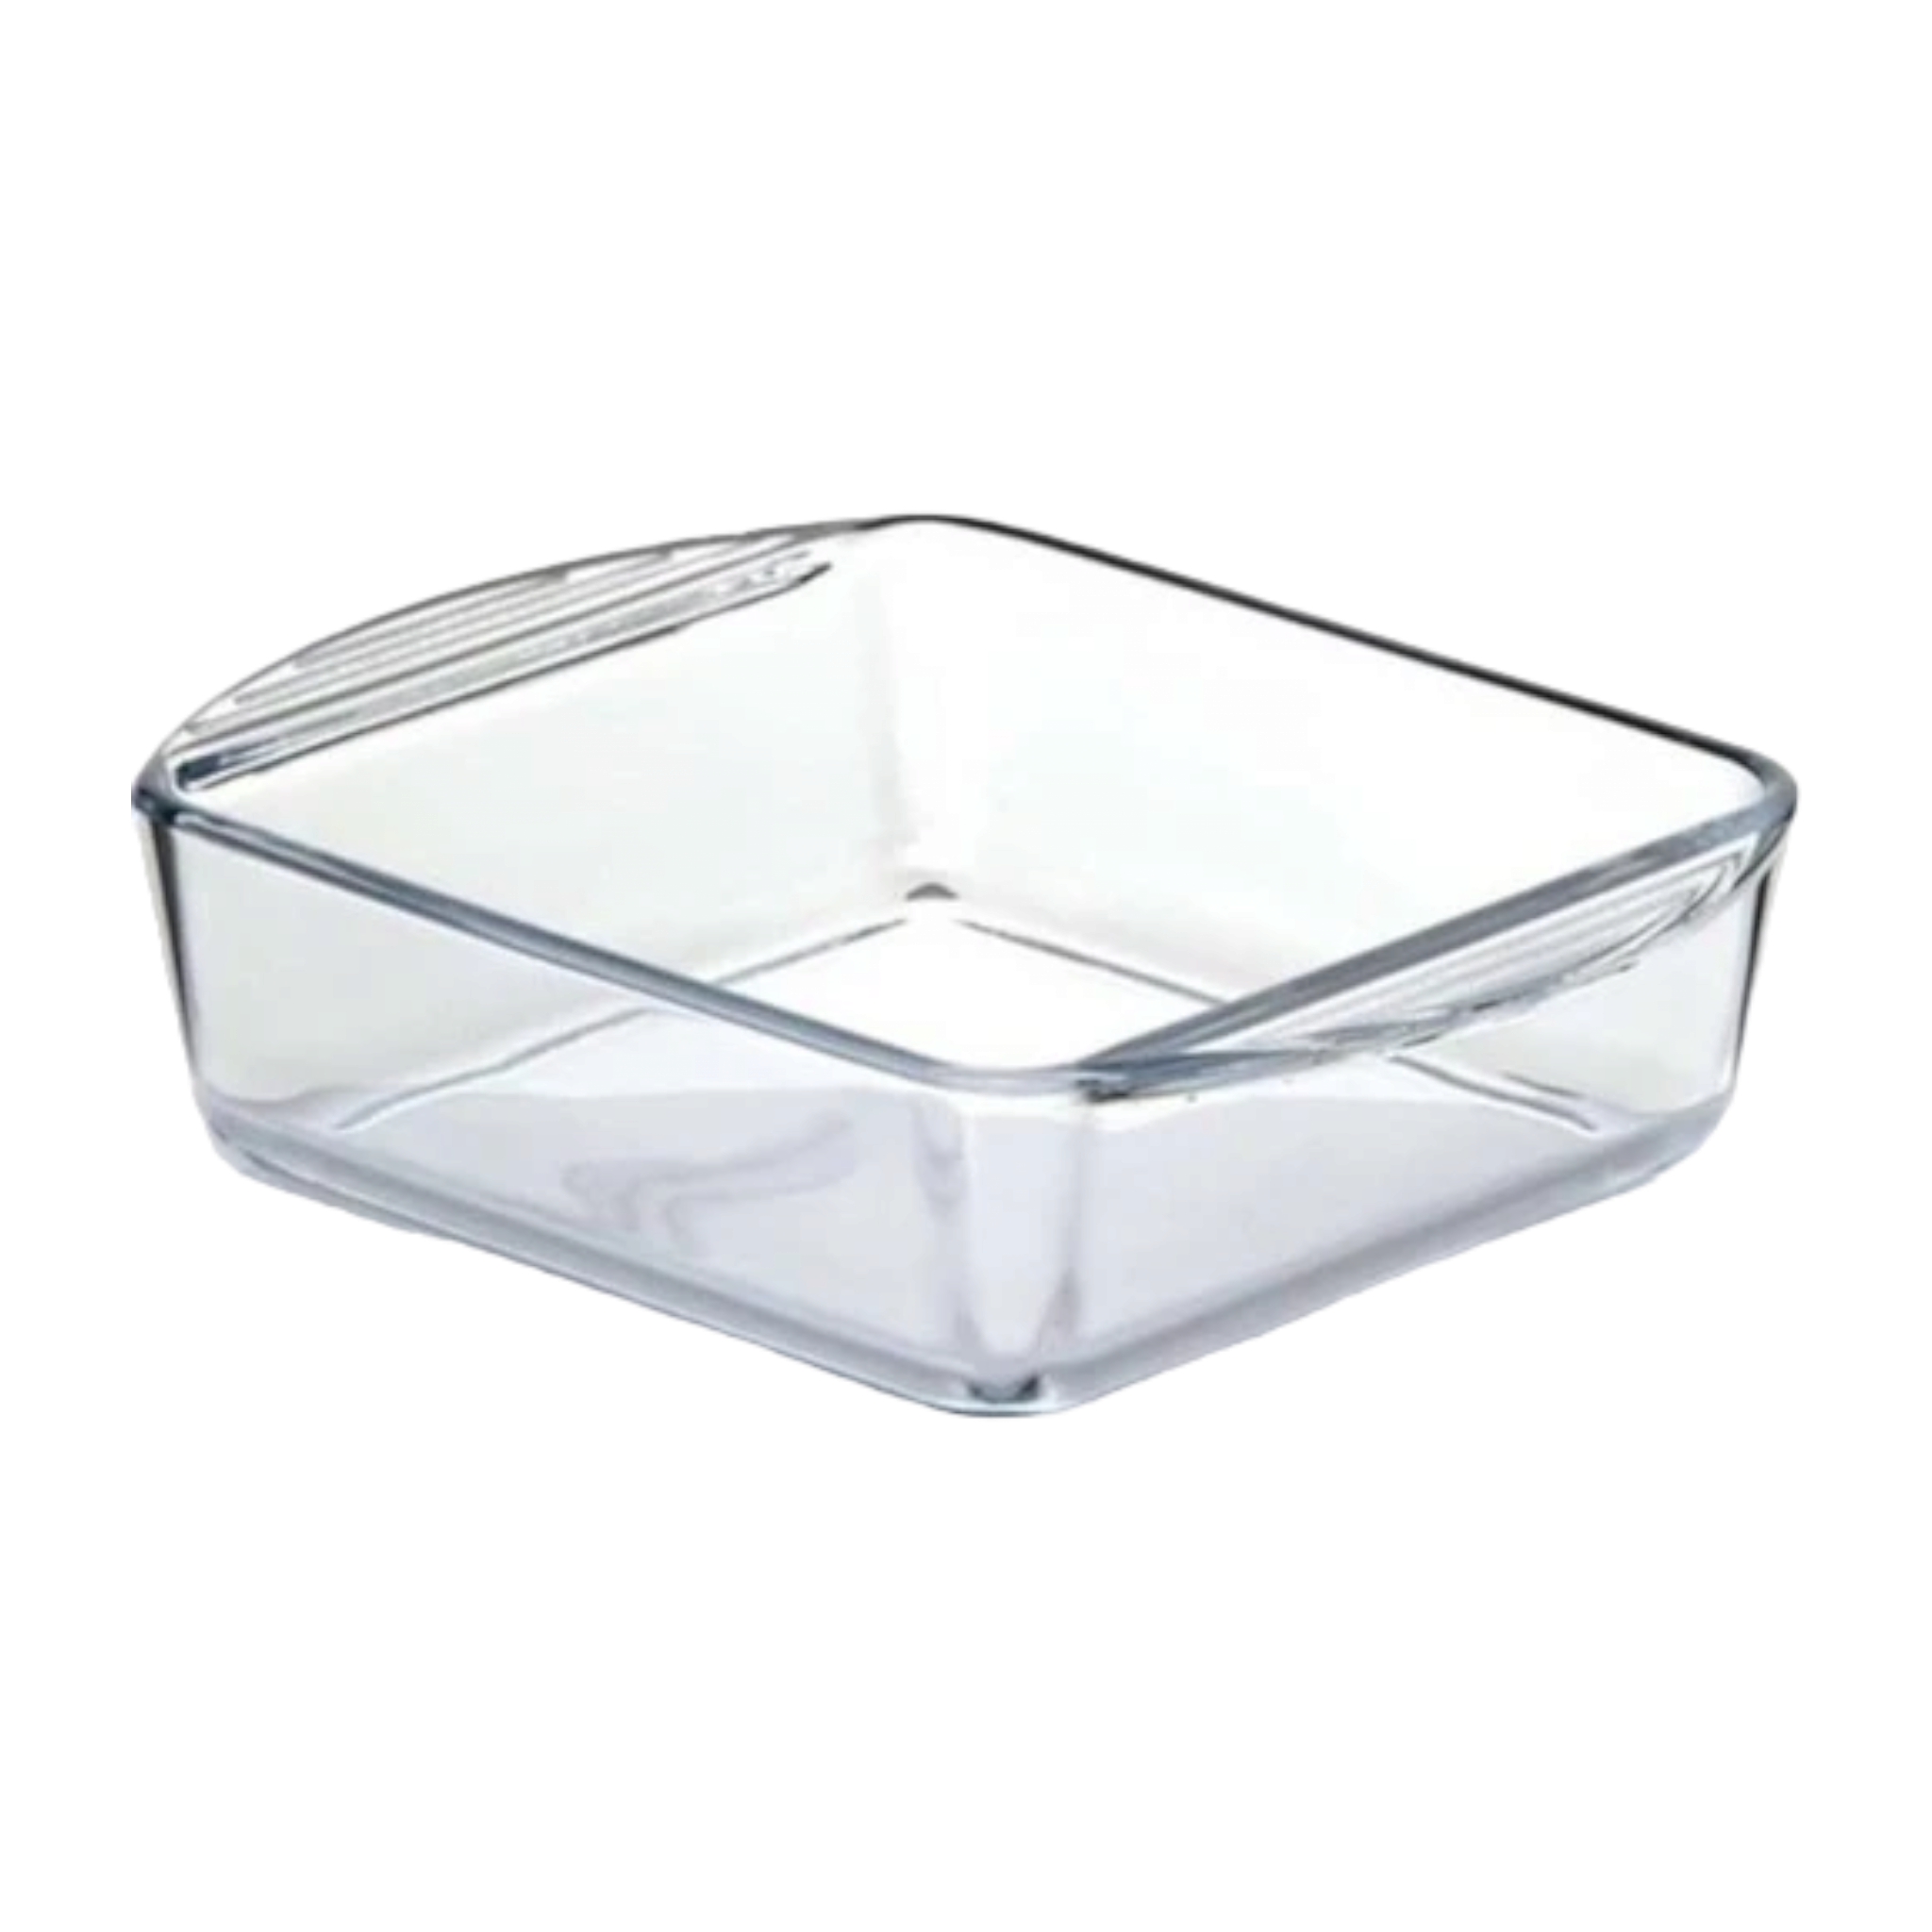 Borcam Glass Serving Dish Tray 1040mm Square 23843